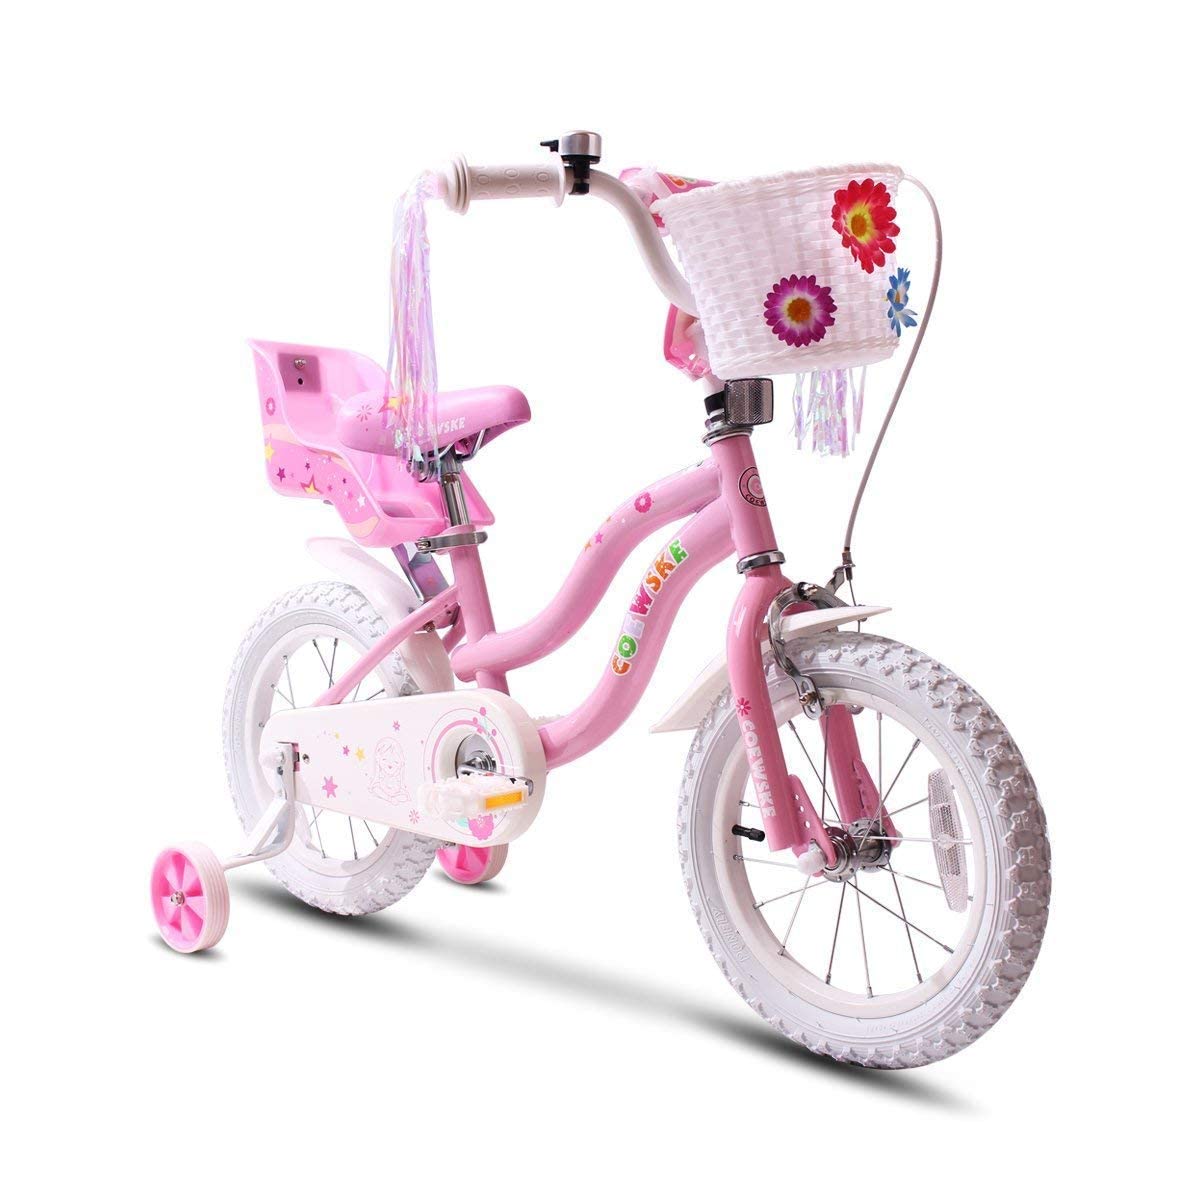 COEWSKE Kid's Bike Steel Frame Children Bicycle Little Princess Style 16 Inch with Training Wheel (16" Pink)